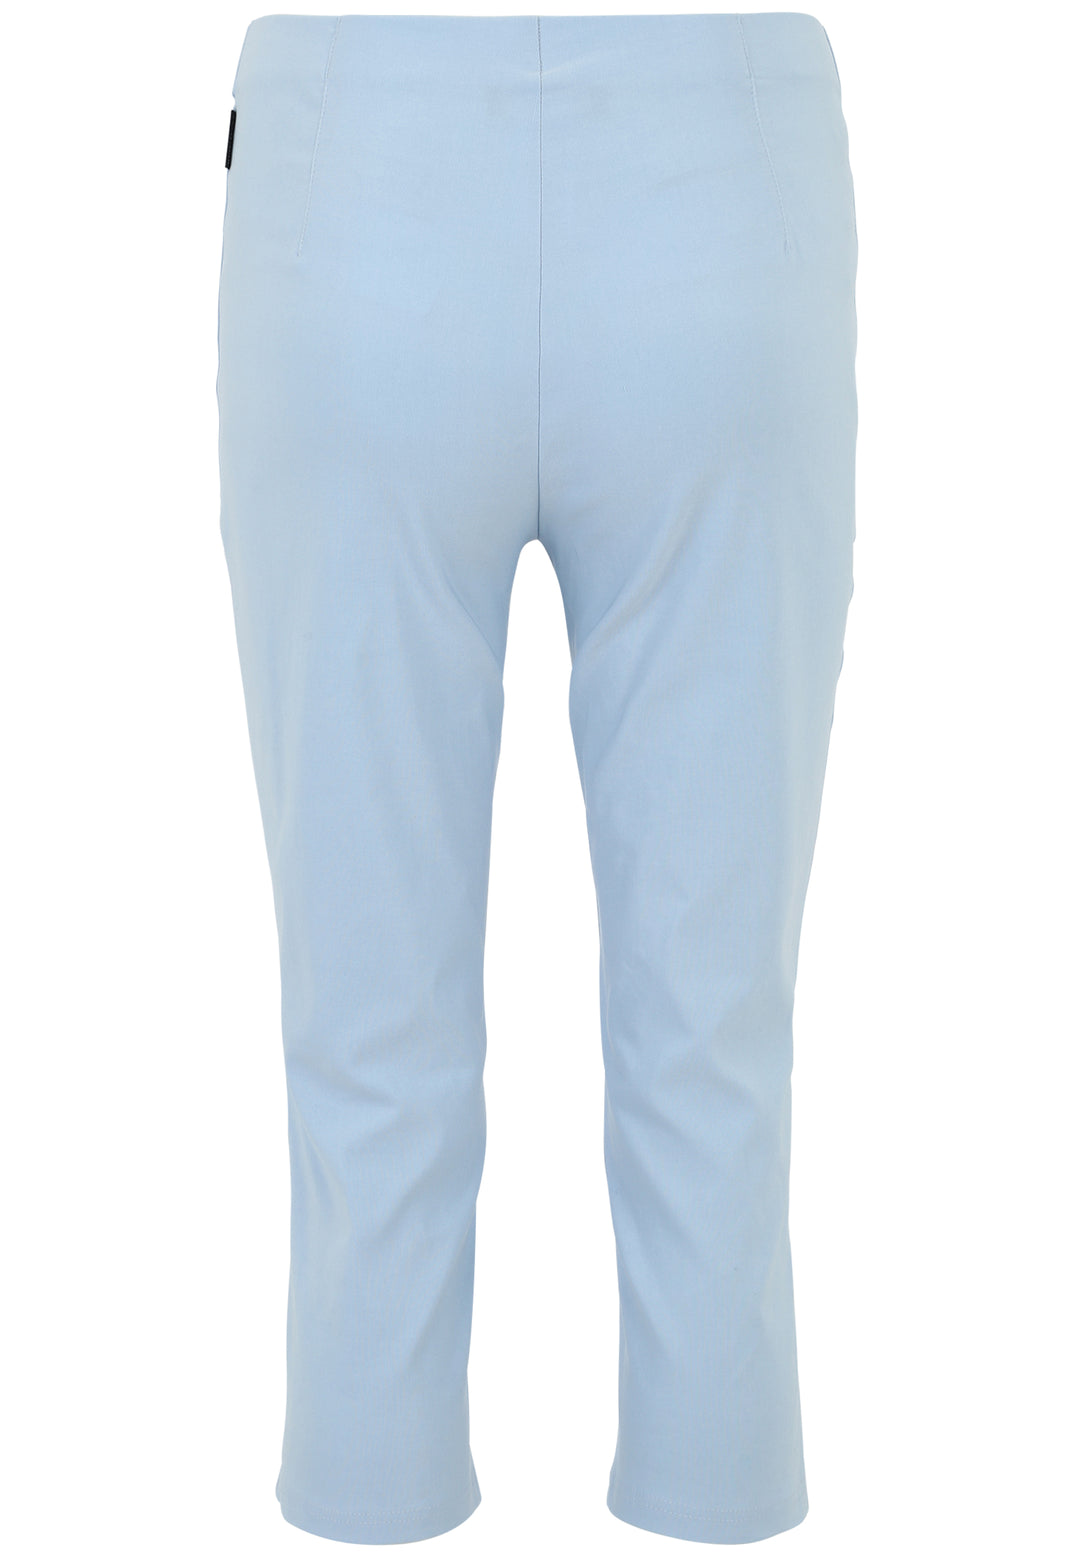 lichtblauwe capri broek - doris streich - 834760 - grote maten - dameskleding - kledingwinkel - herent - leuven